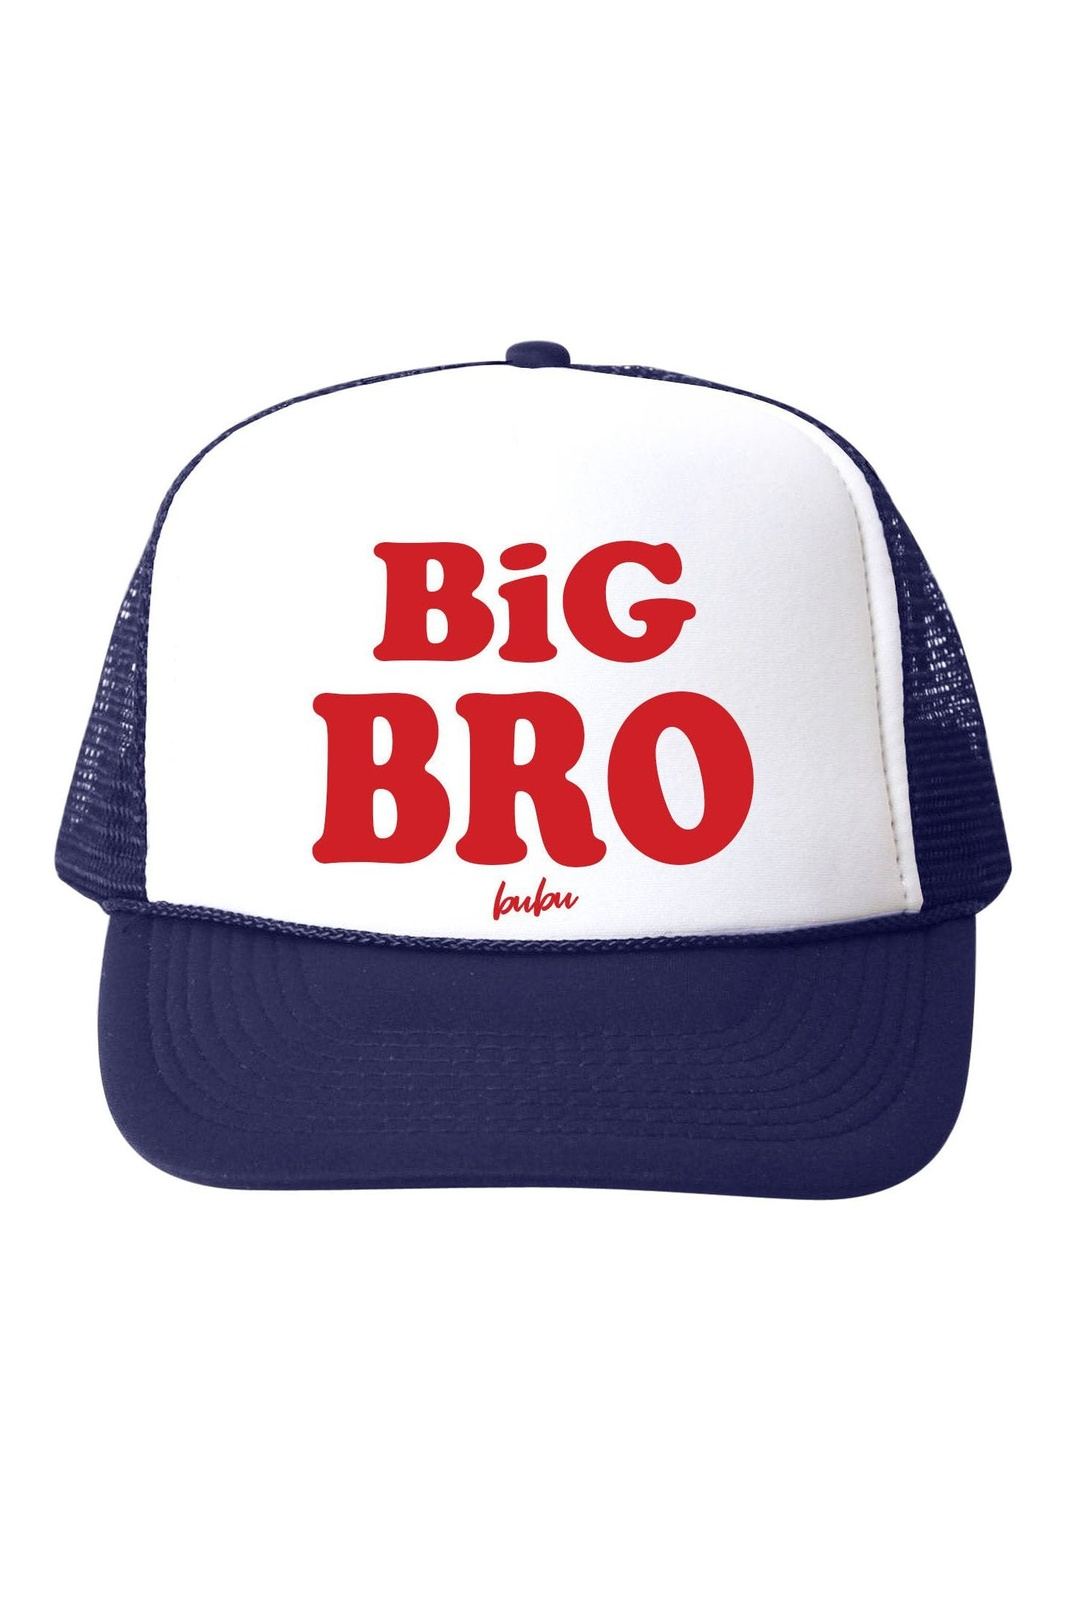 Big Bro Trucker Hat - Tea for Three: A Children's Boutique-New Arrivals-Tea for Three: A Children's Boutique